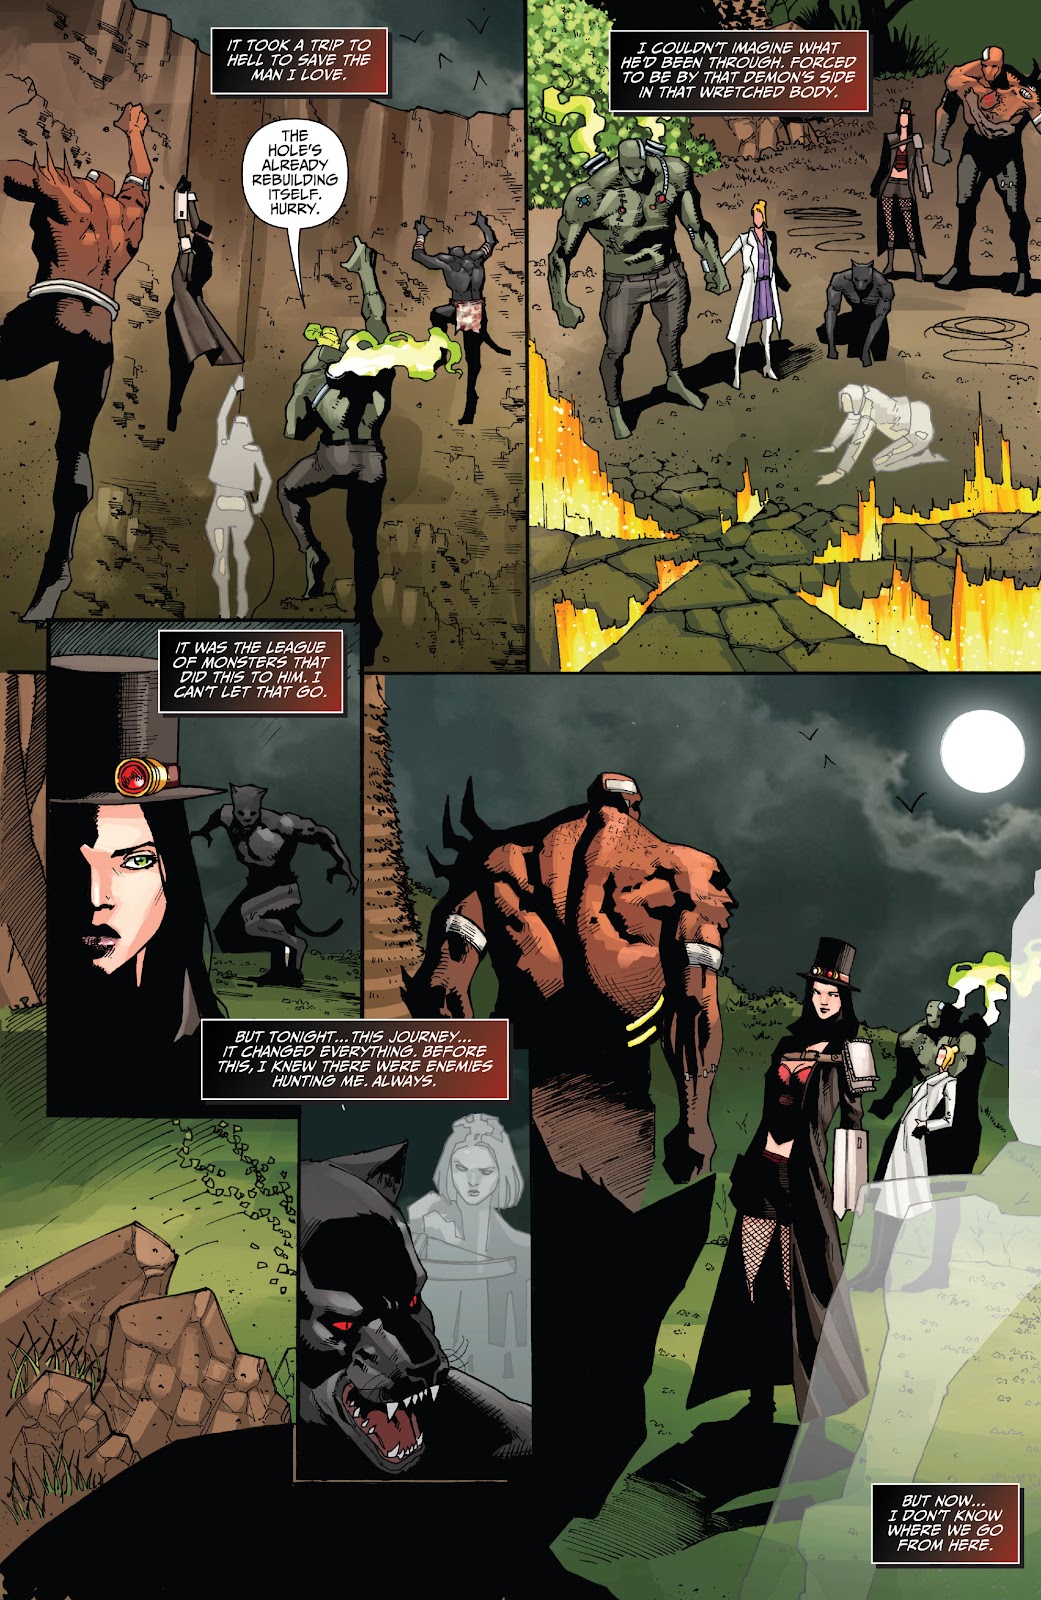 Van Helsing: Return of the League of Monsters issue 2 - Page 33